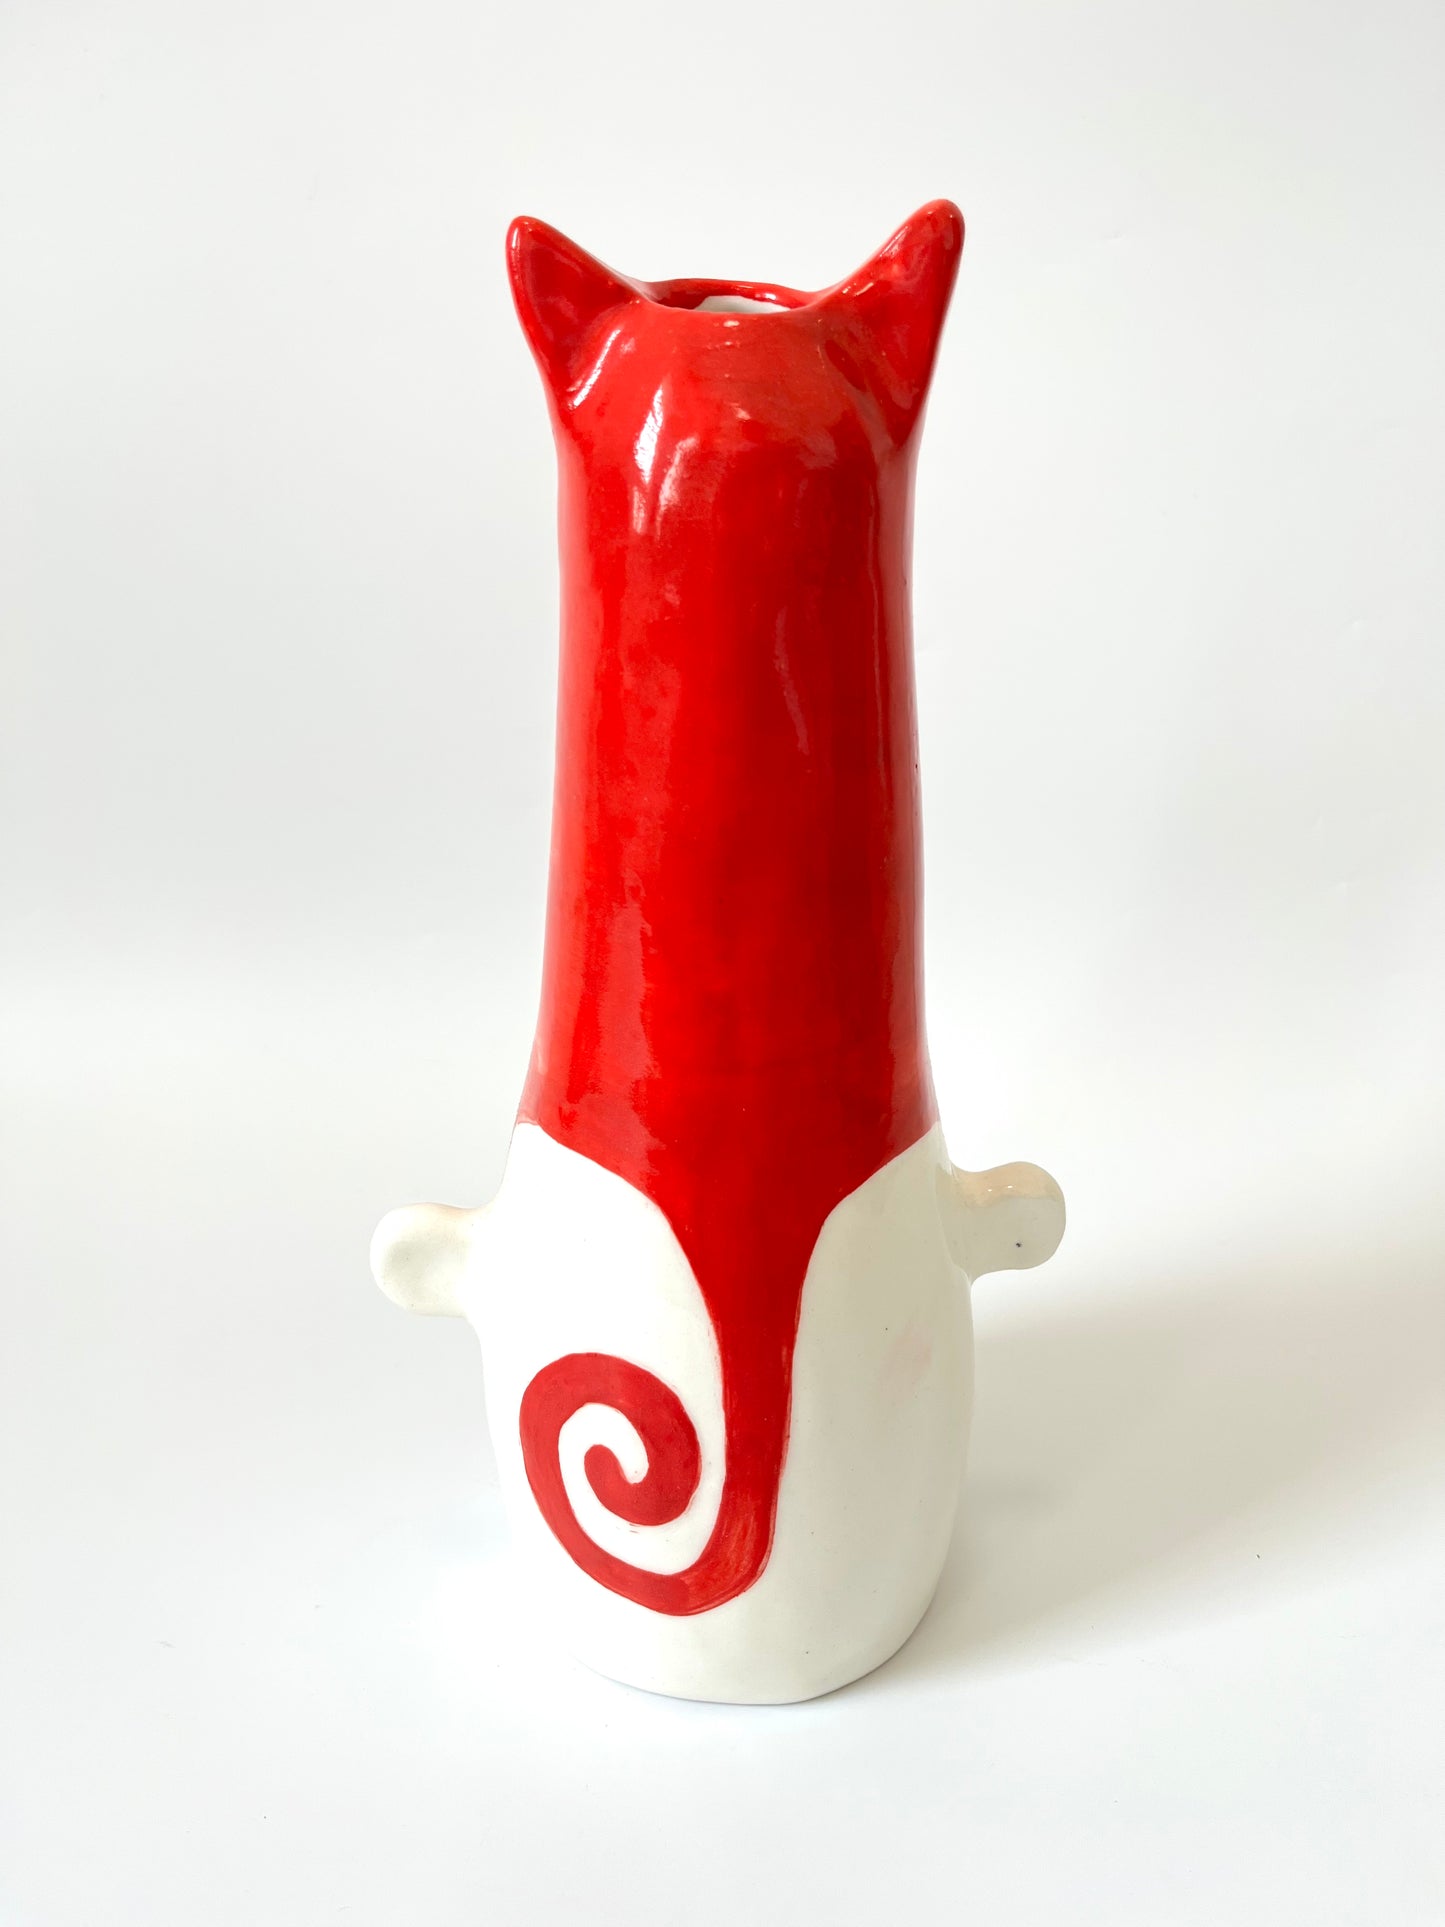 Cat Human Vase #3 by Studio Soph